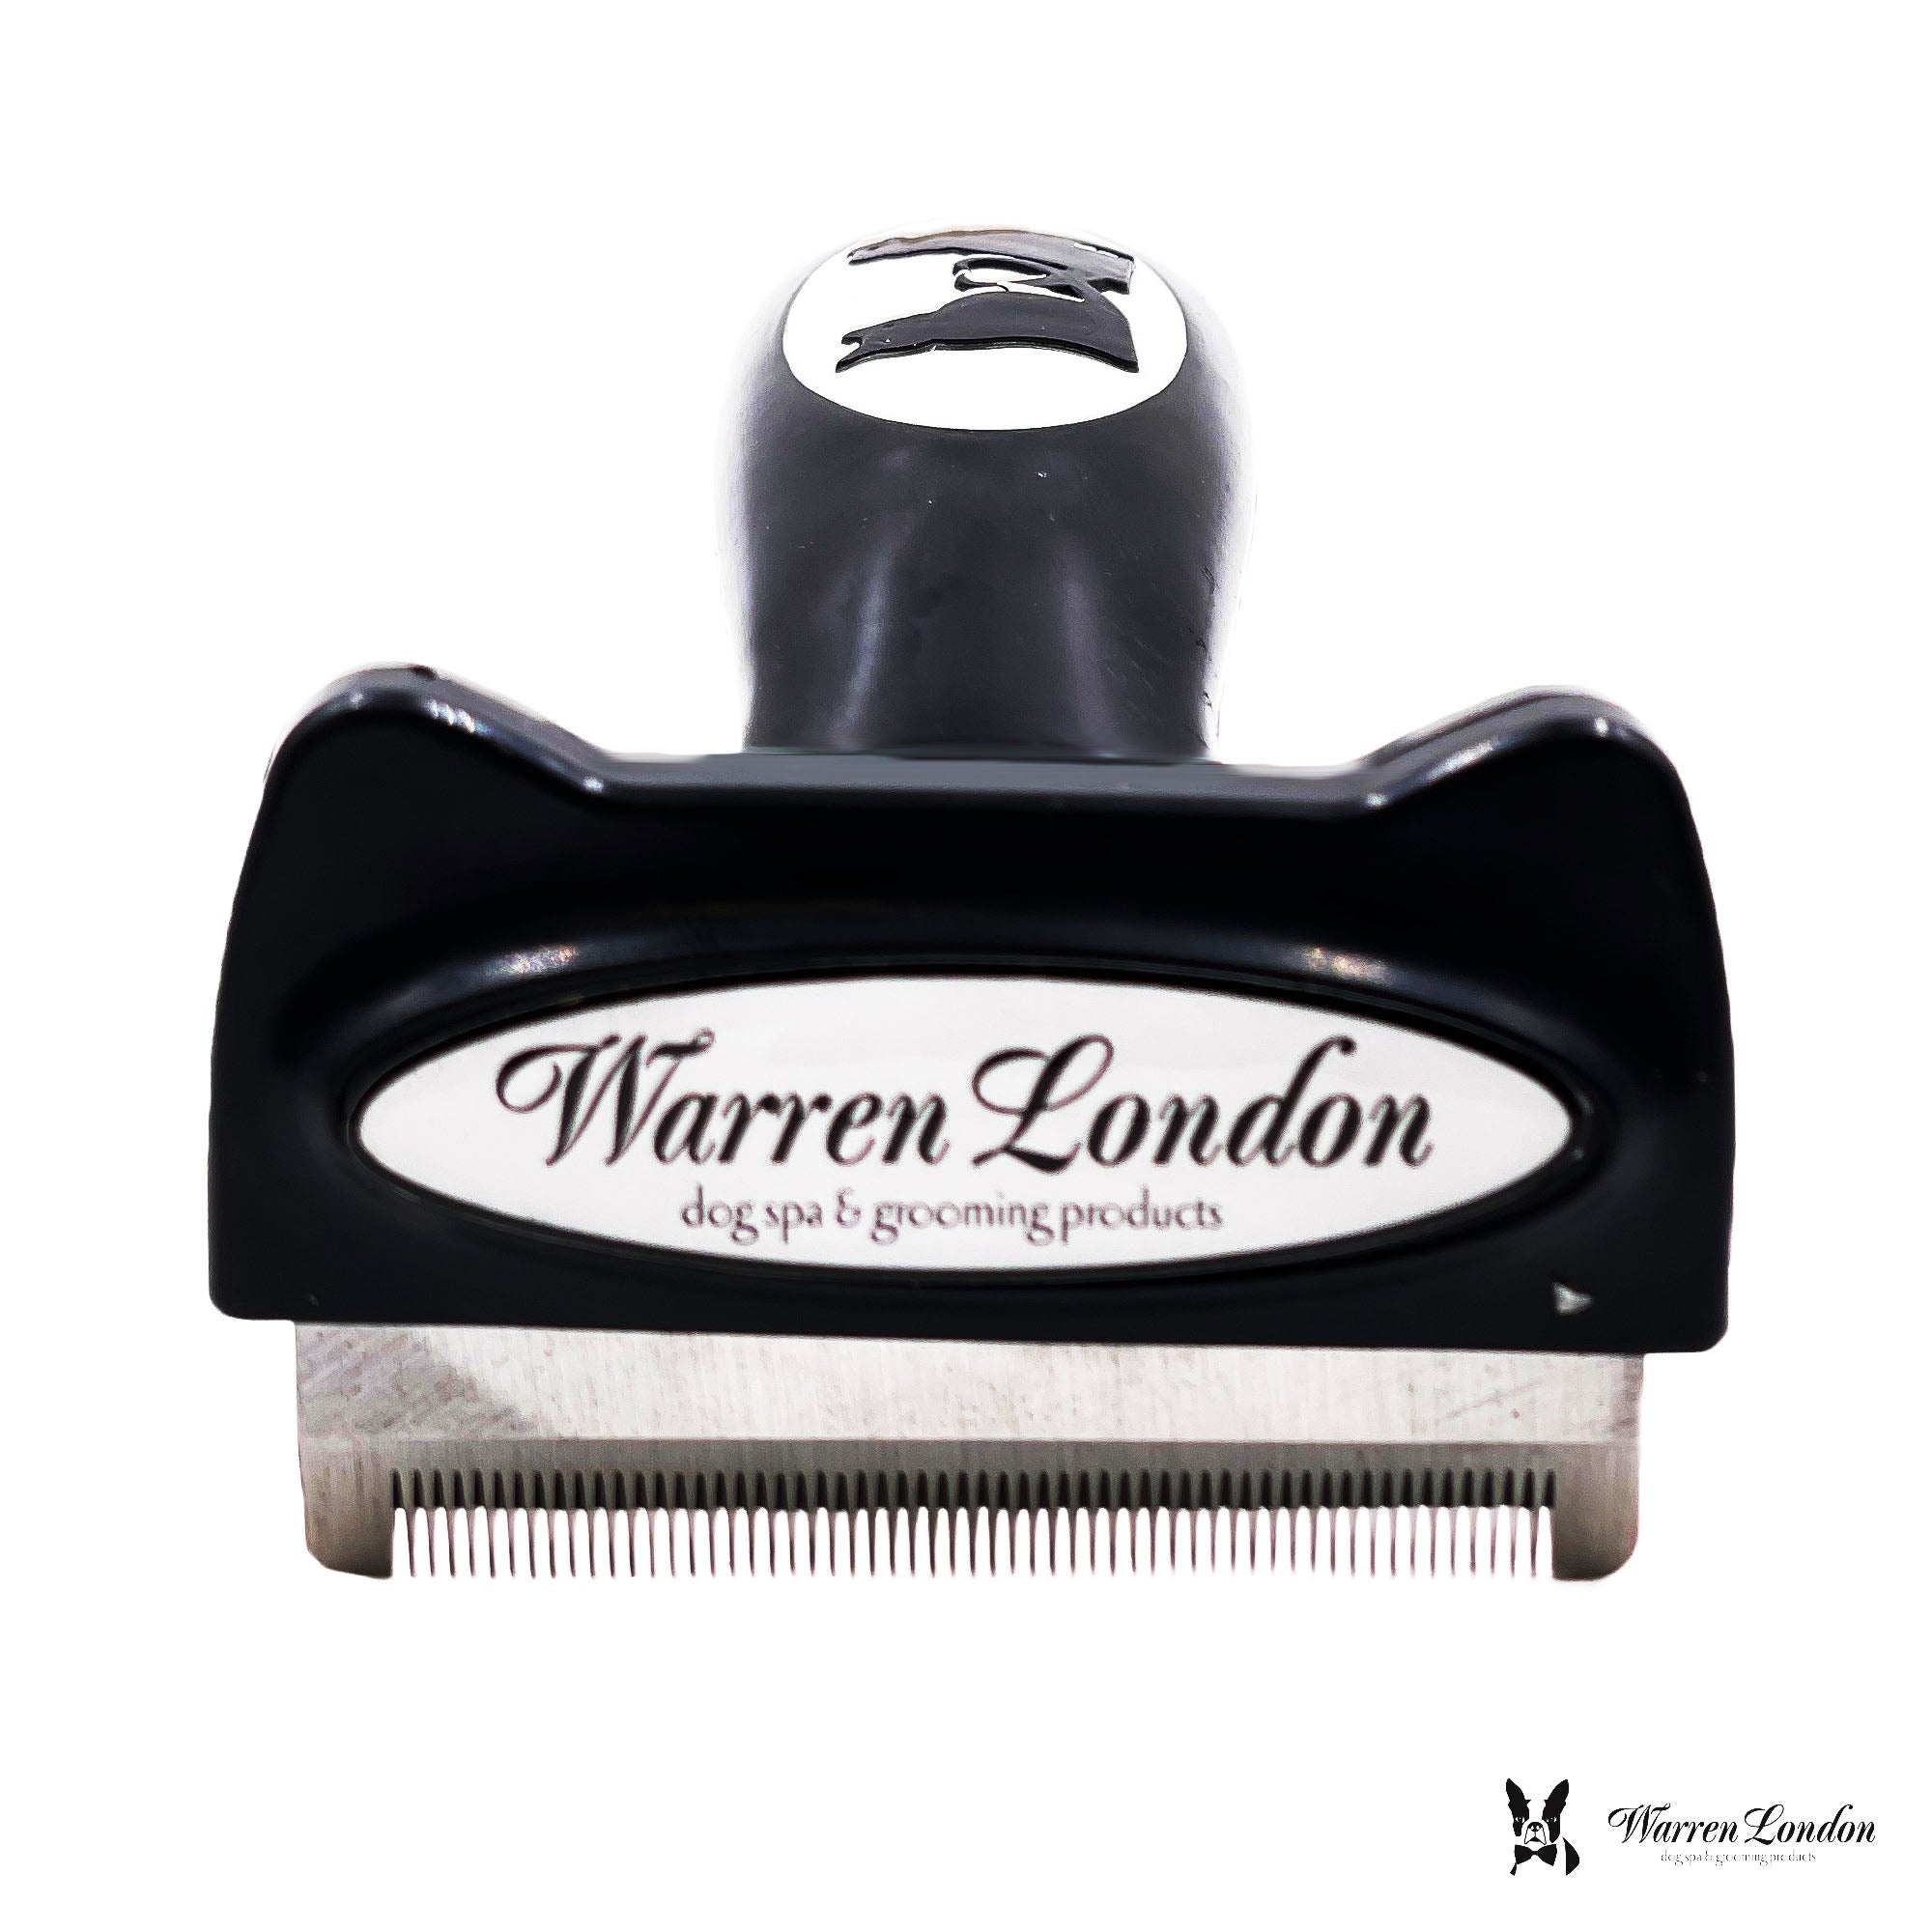 De-Shedding Dog Brush for Short Hair (<1") Leashes, Collars & Accessories Warren London 